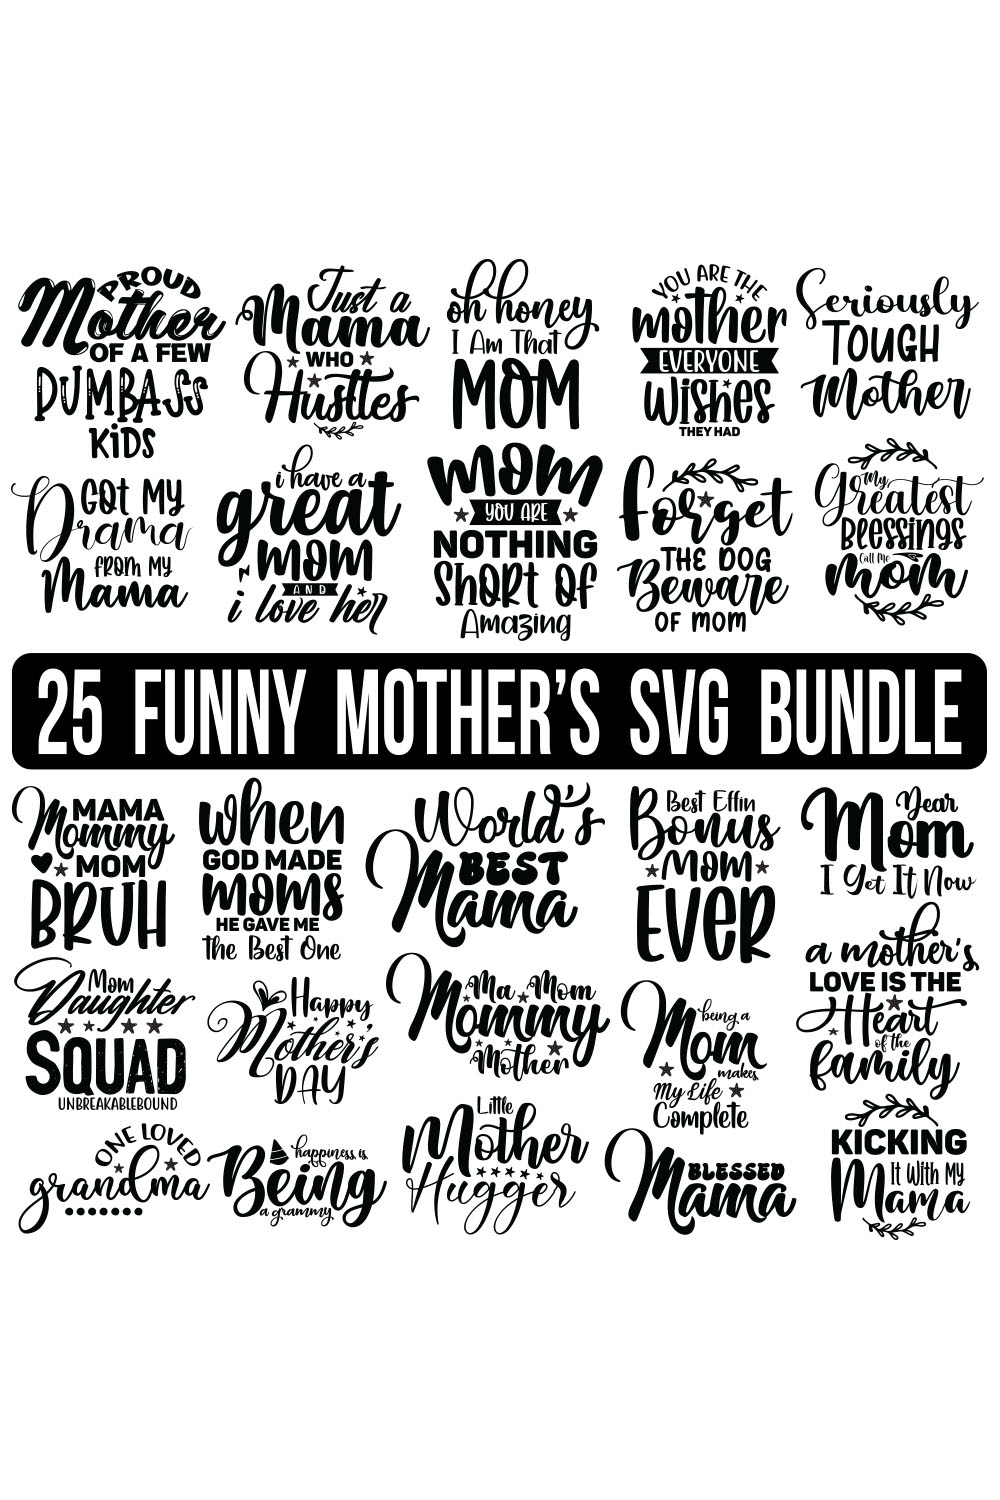 Women's Day SVG Bundle,Women's Day SVG designs,Girl power designs, SVG files,Digital downloads, Mom Bundle SVG, Mother's Day Svg, pinterest preview image.